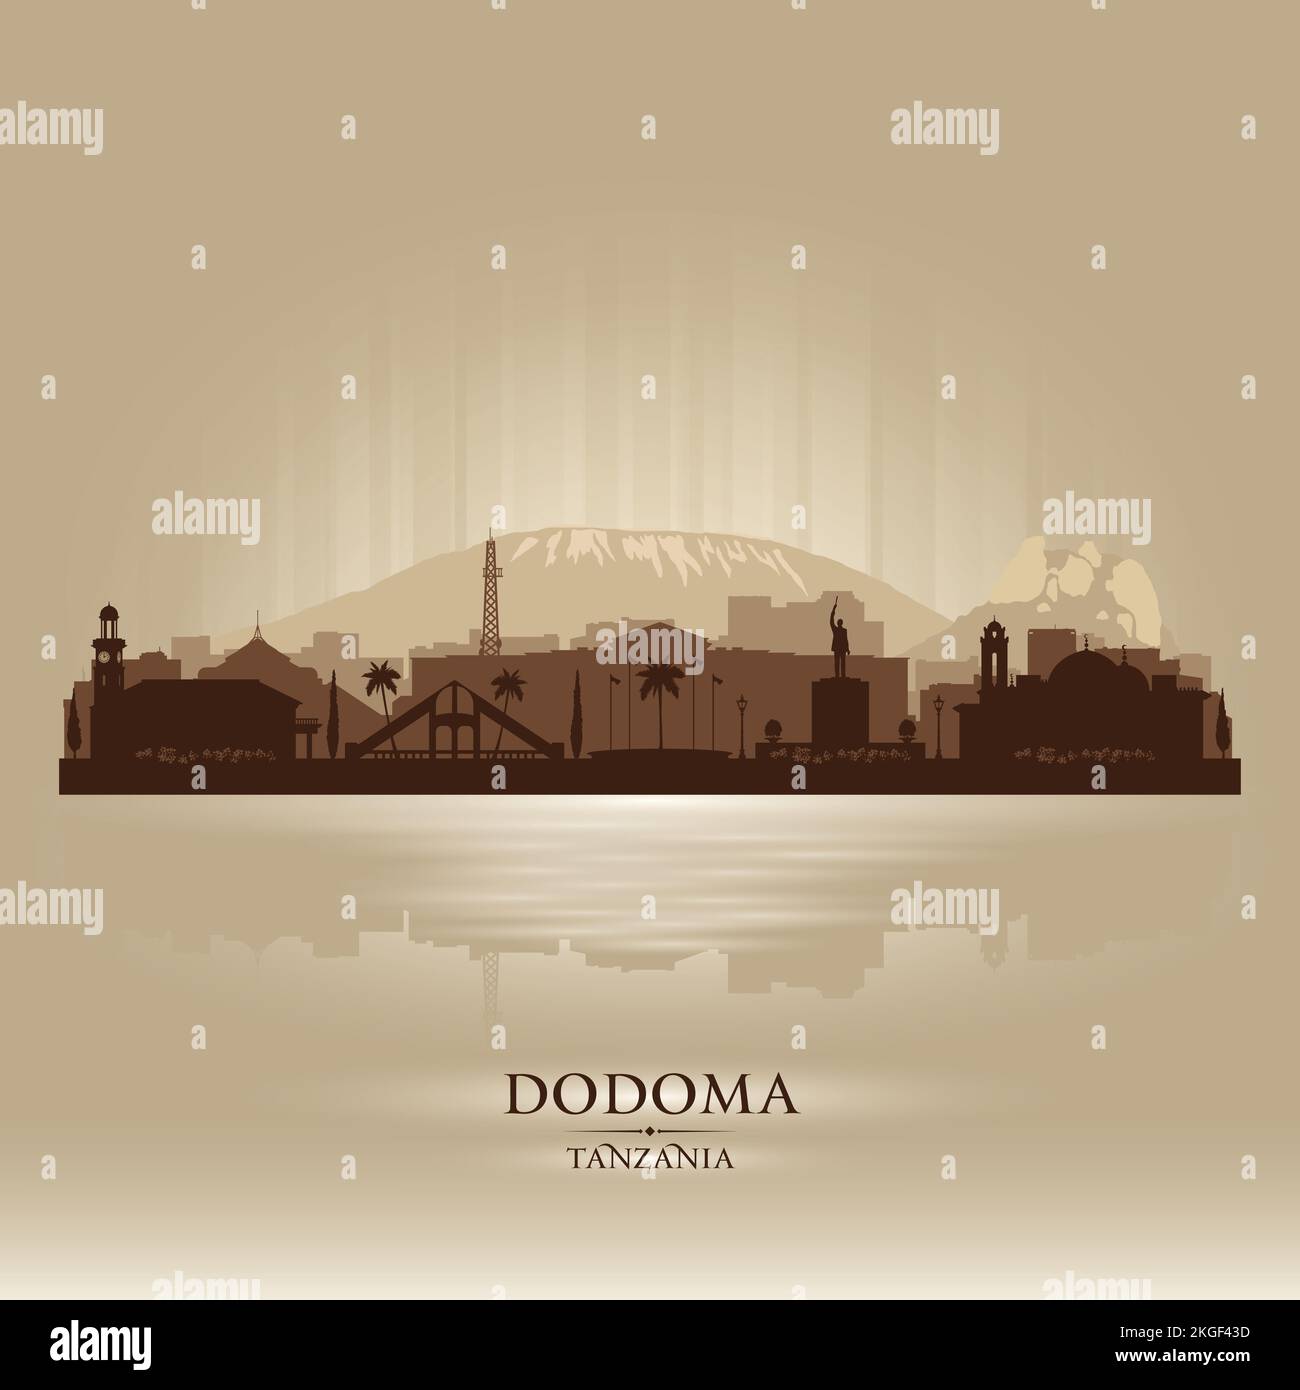 Dodoma Tanzania city skyline vector silhouette illustration Stock Vector